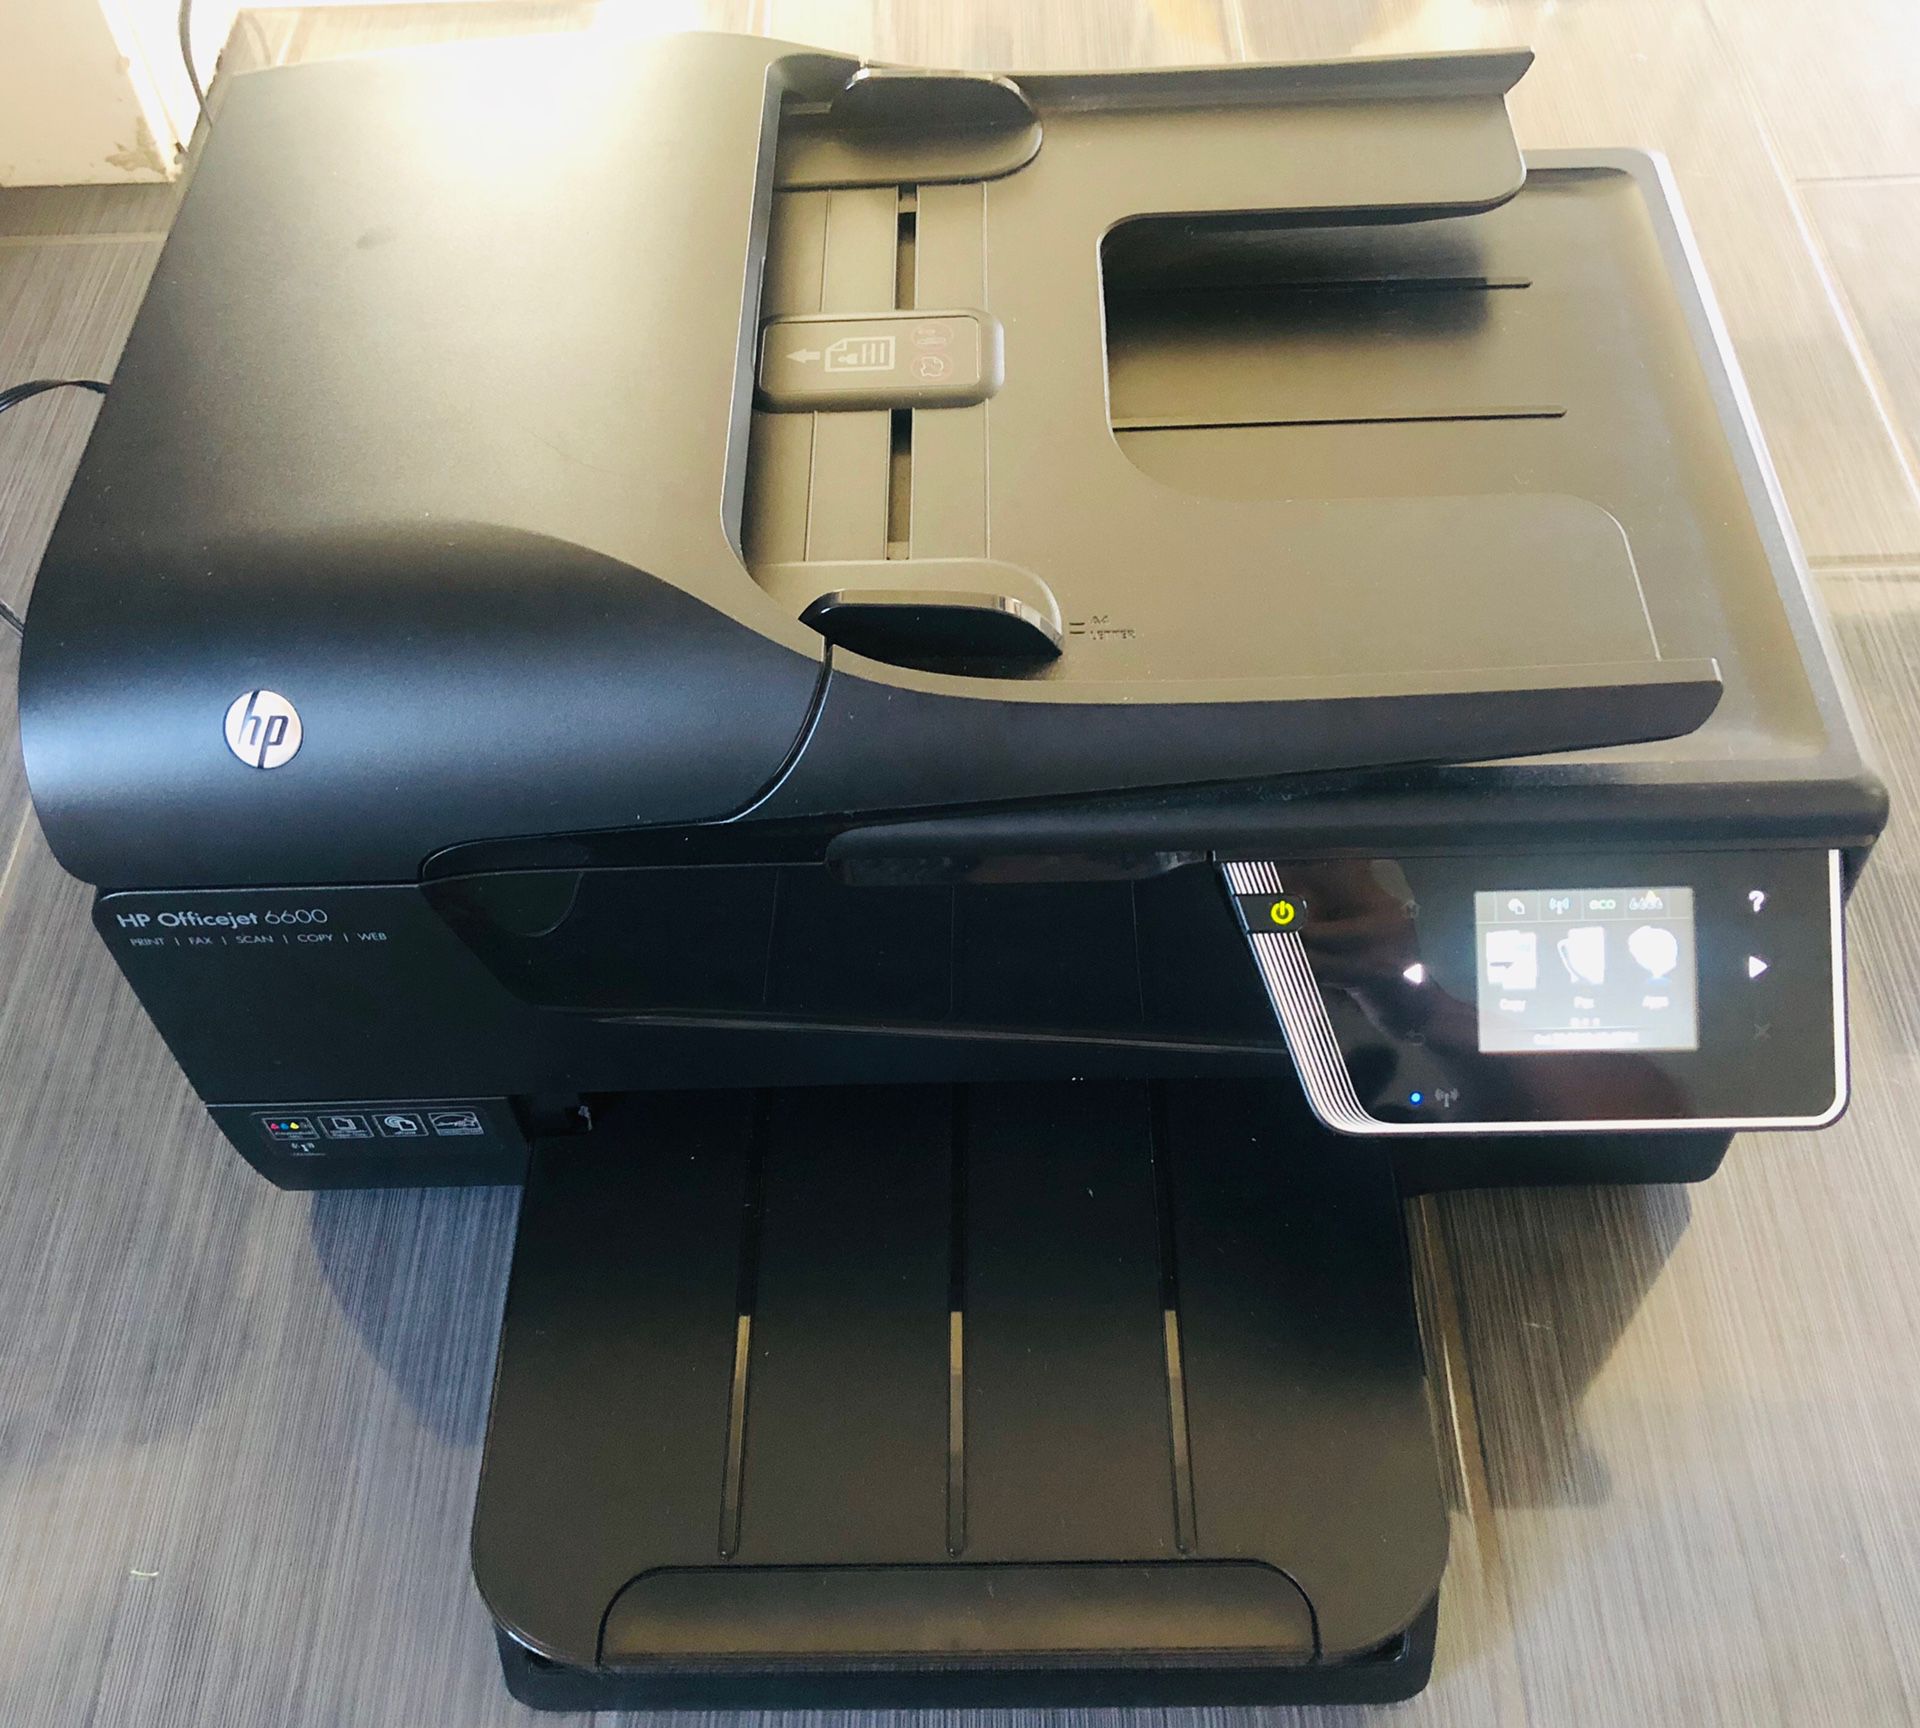 HP Officejet 6600 all-in-one wireless printer